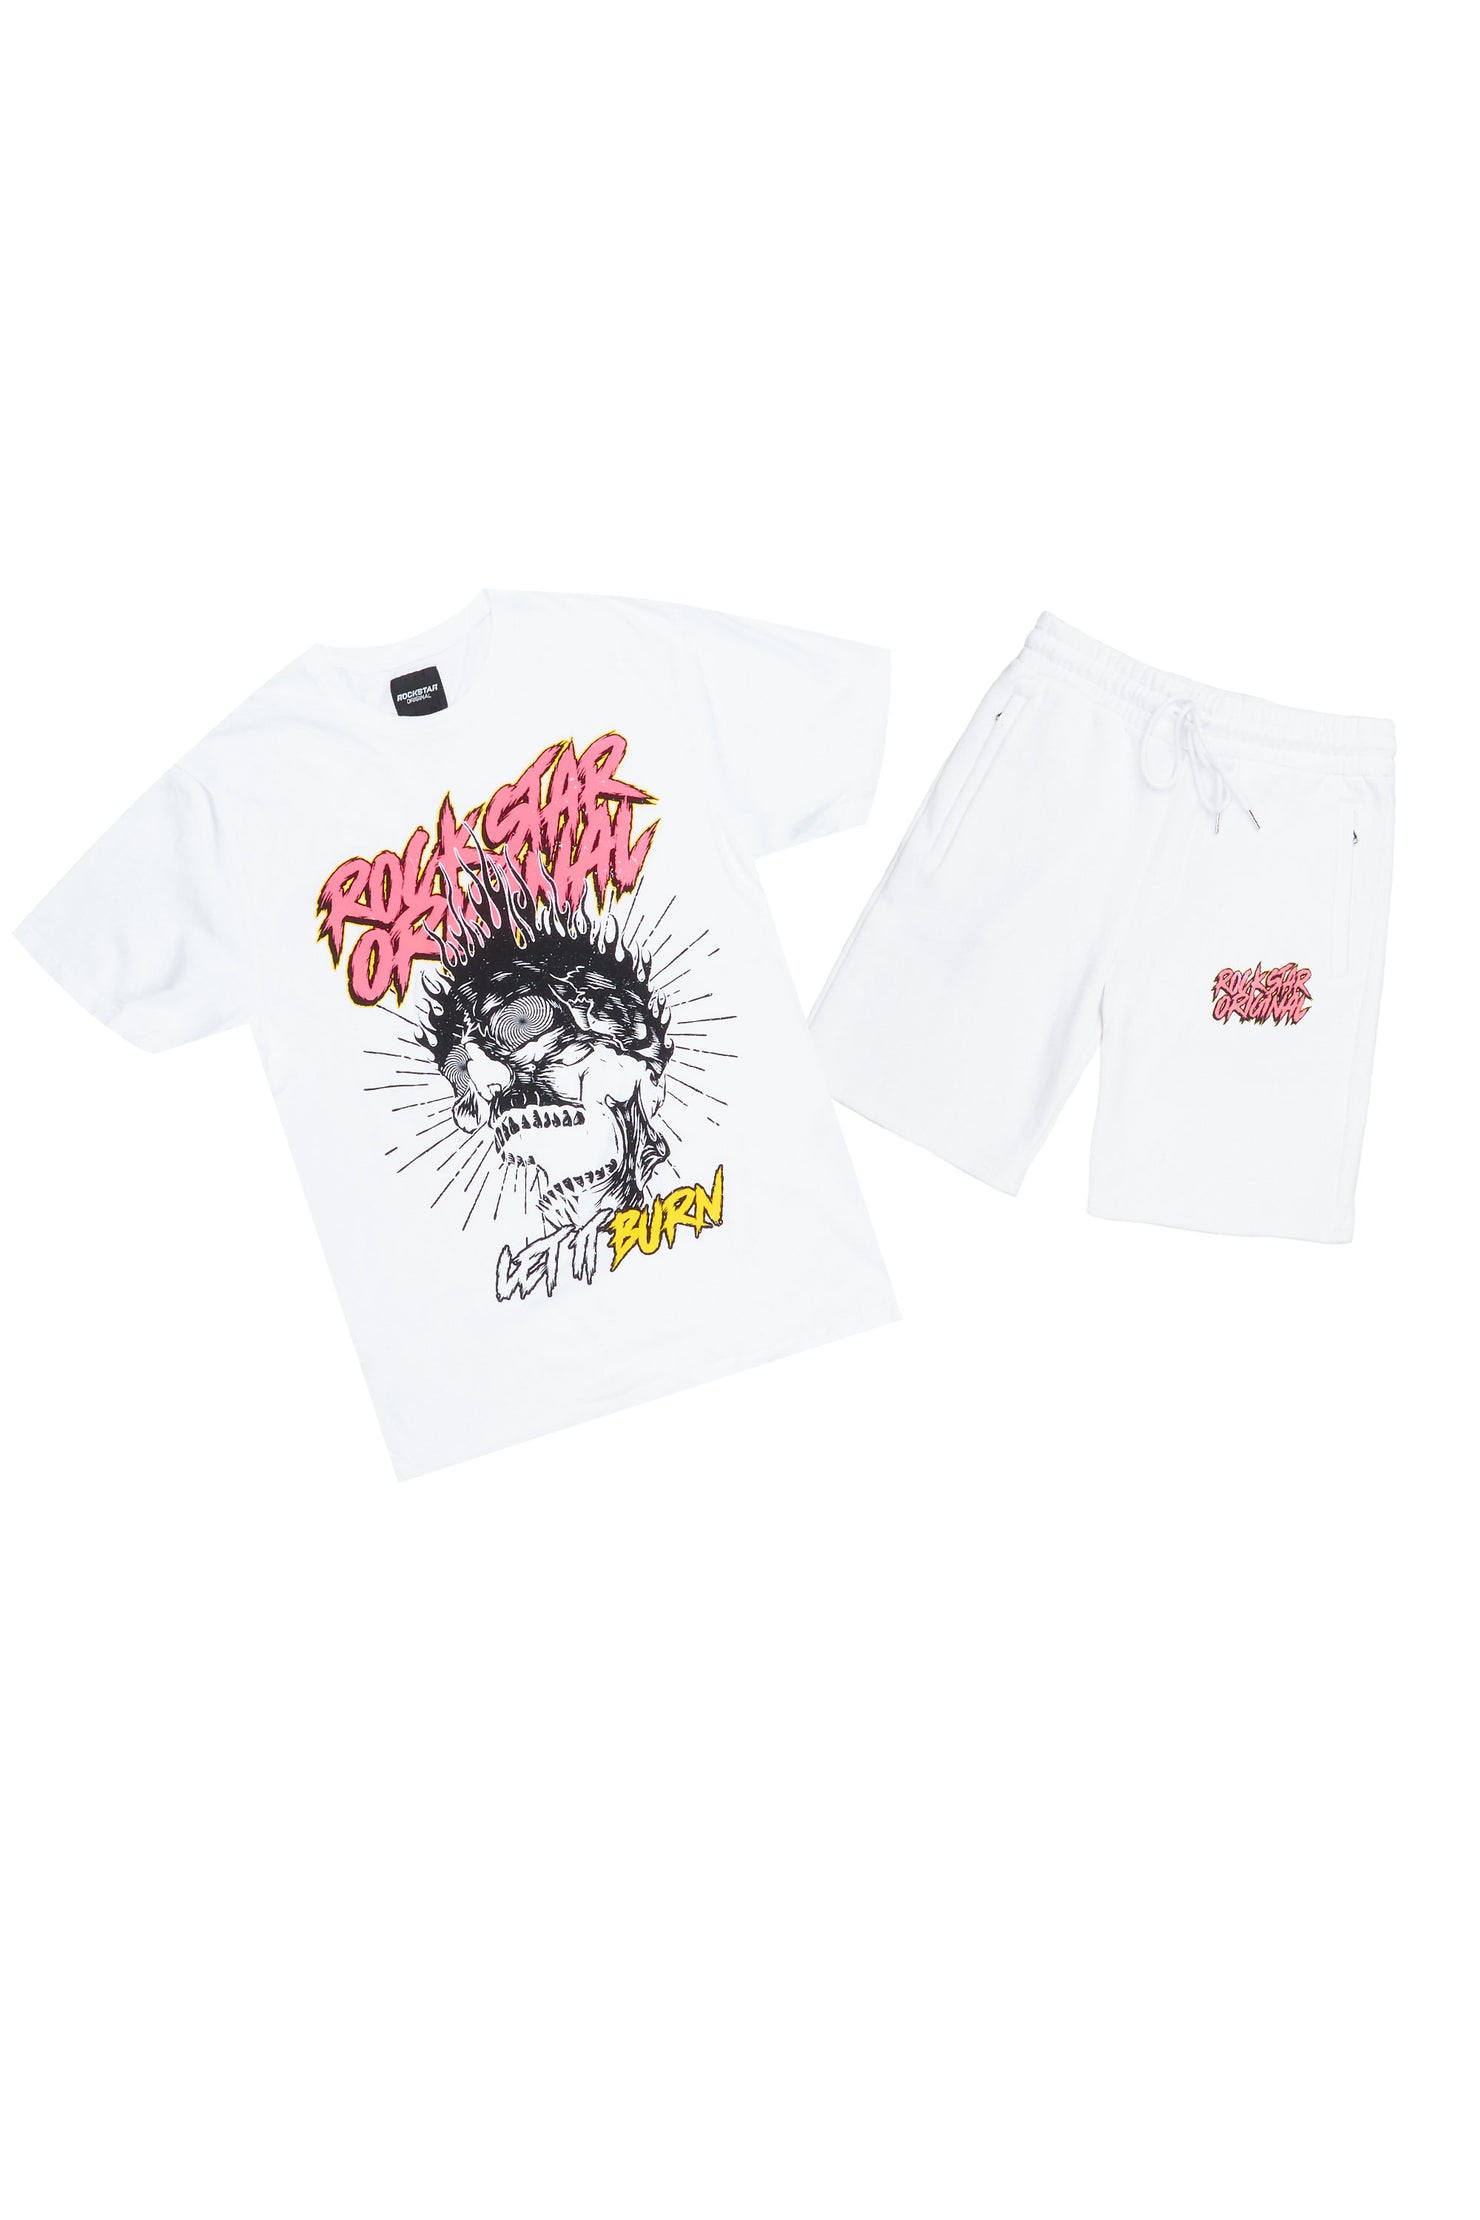 Zev White Graphic T-Shirt Short Set